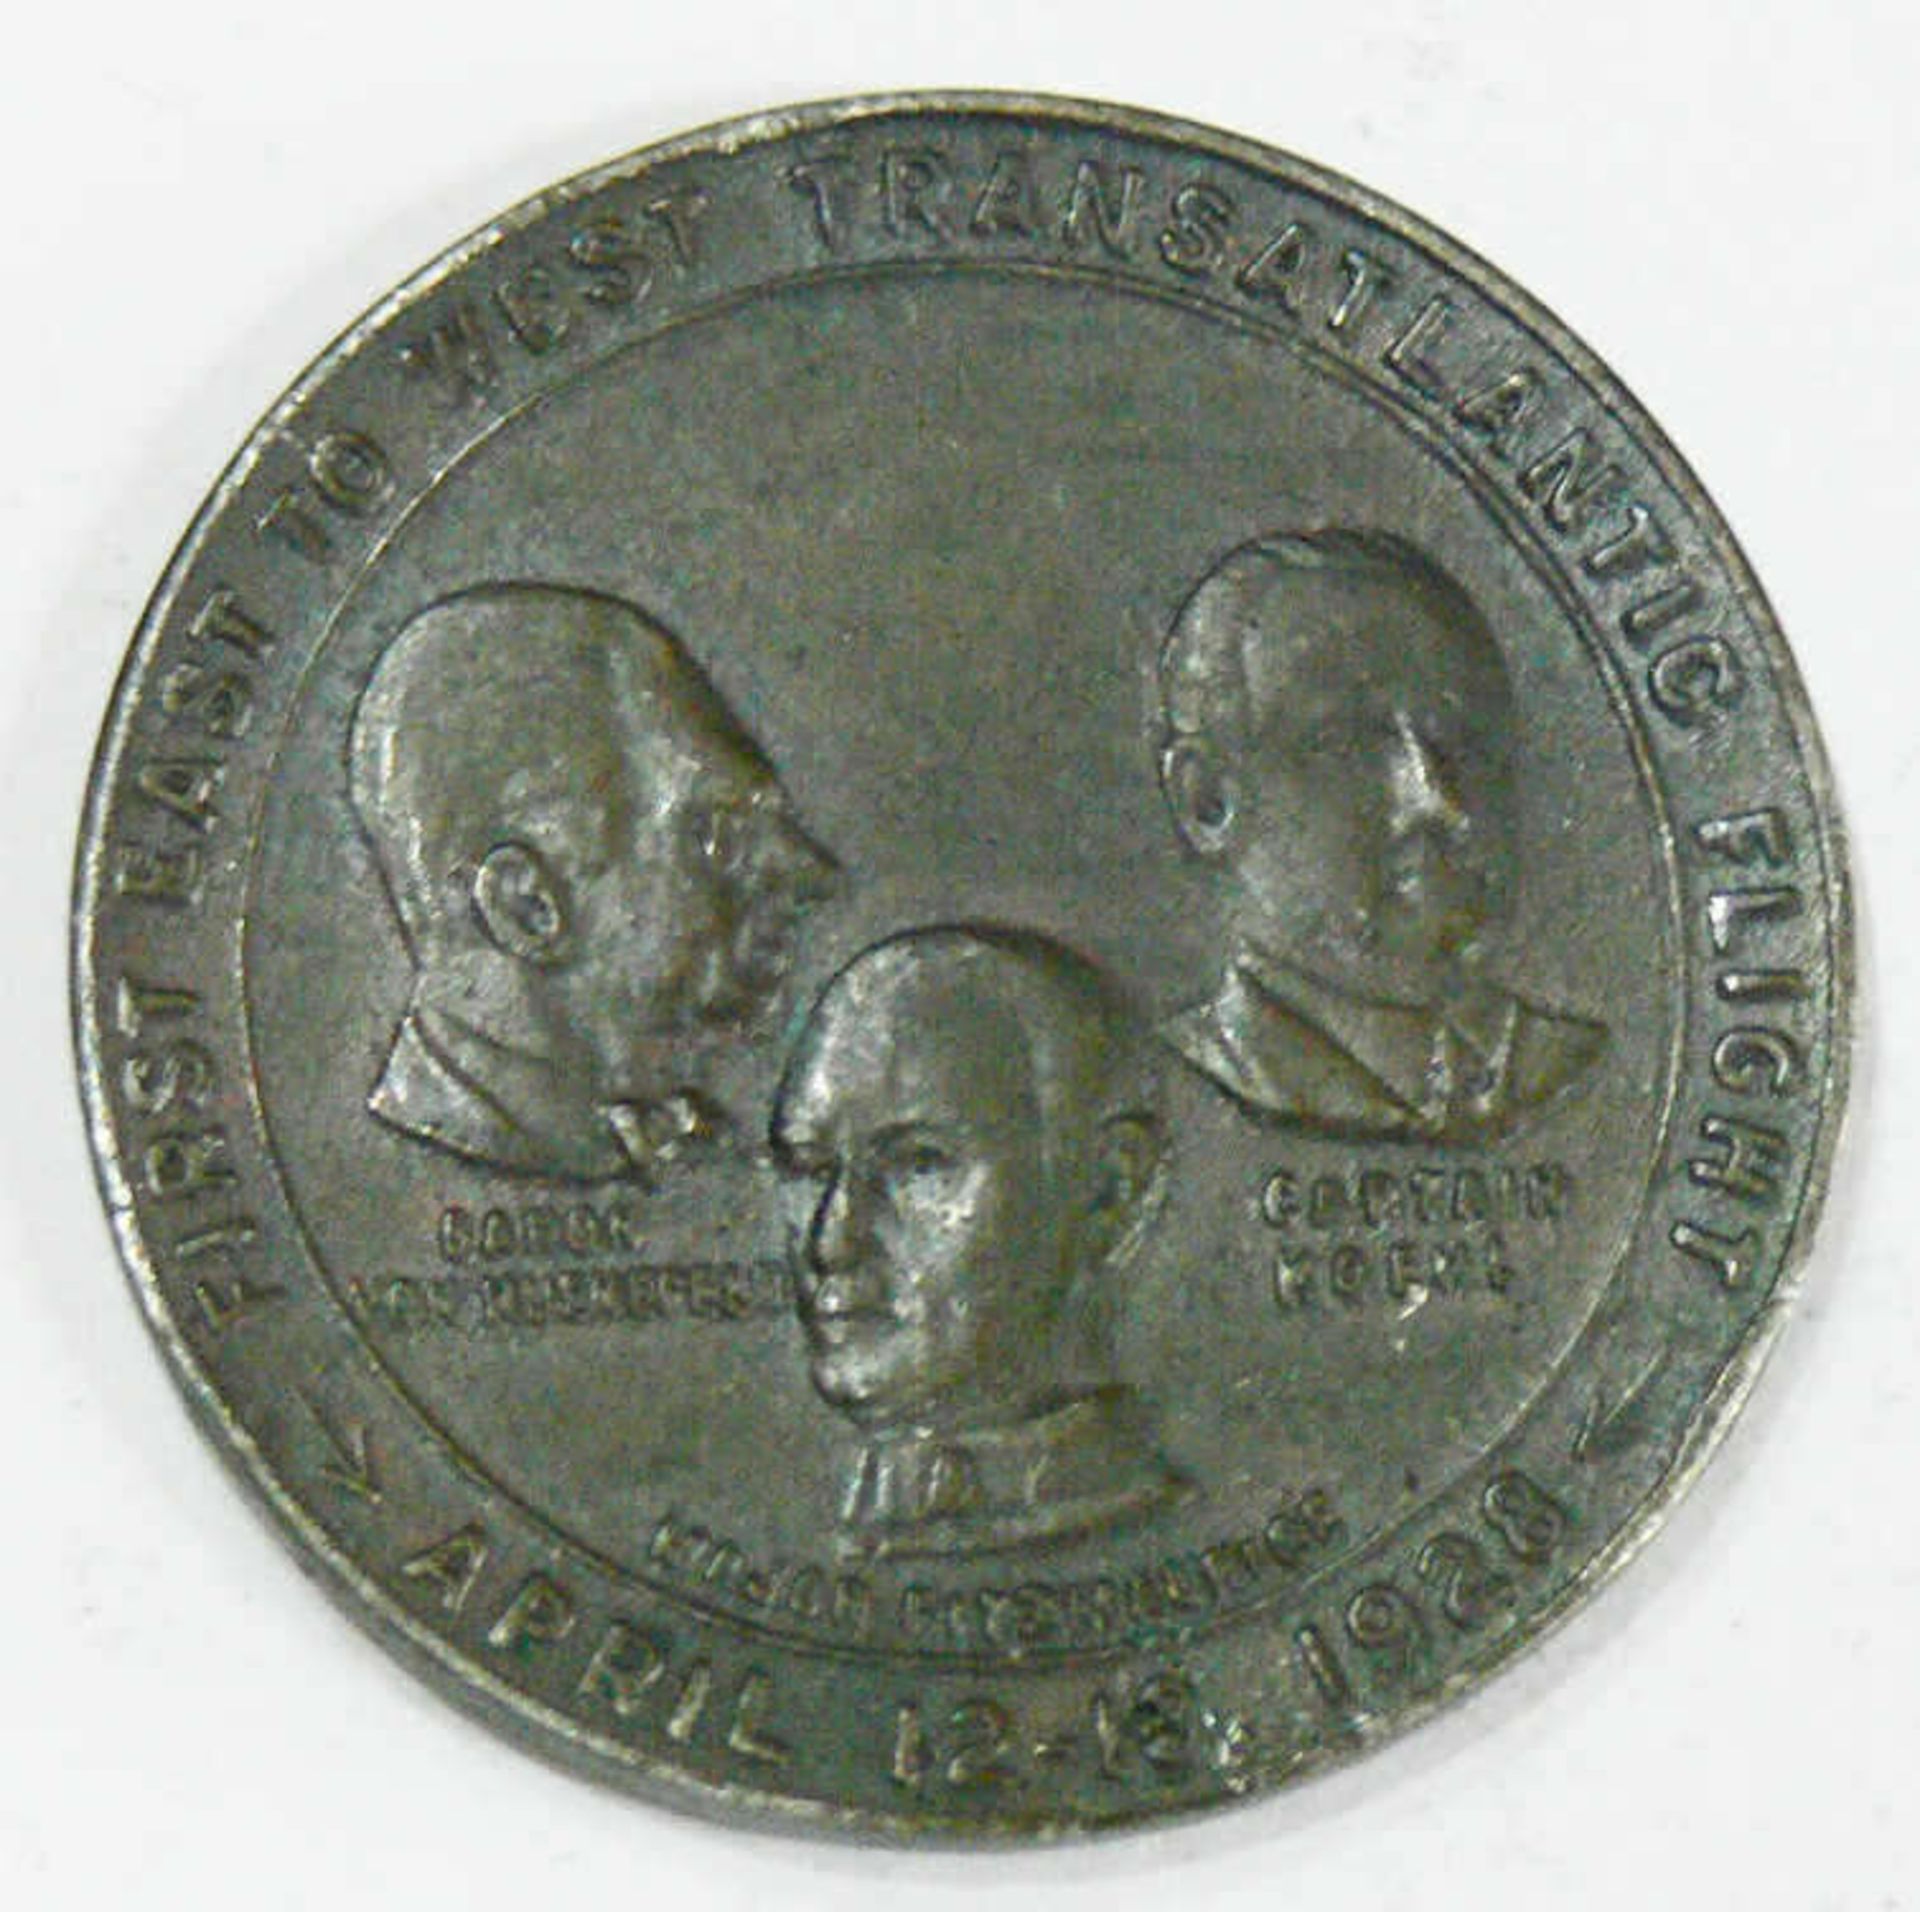 Luftfahrt - Medaille, erster Ost-West - Transatlantik - Flug der Bremen. Durchmesser: ca. 32 mm.